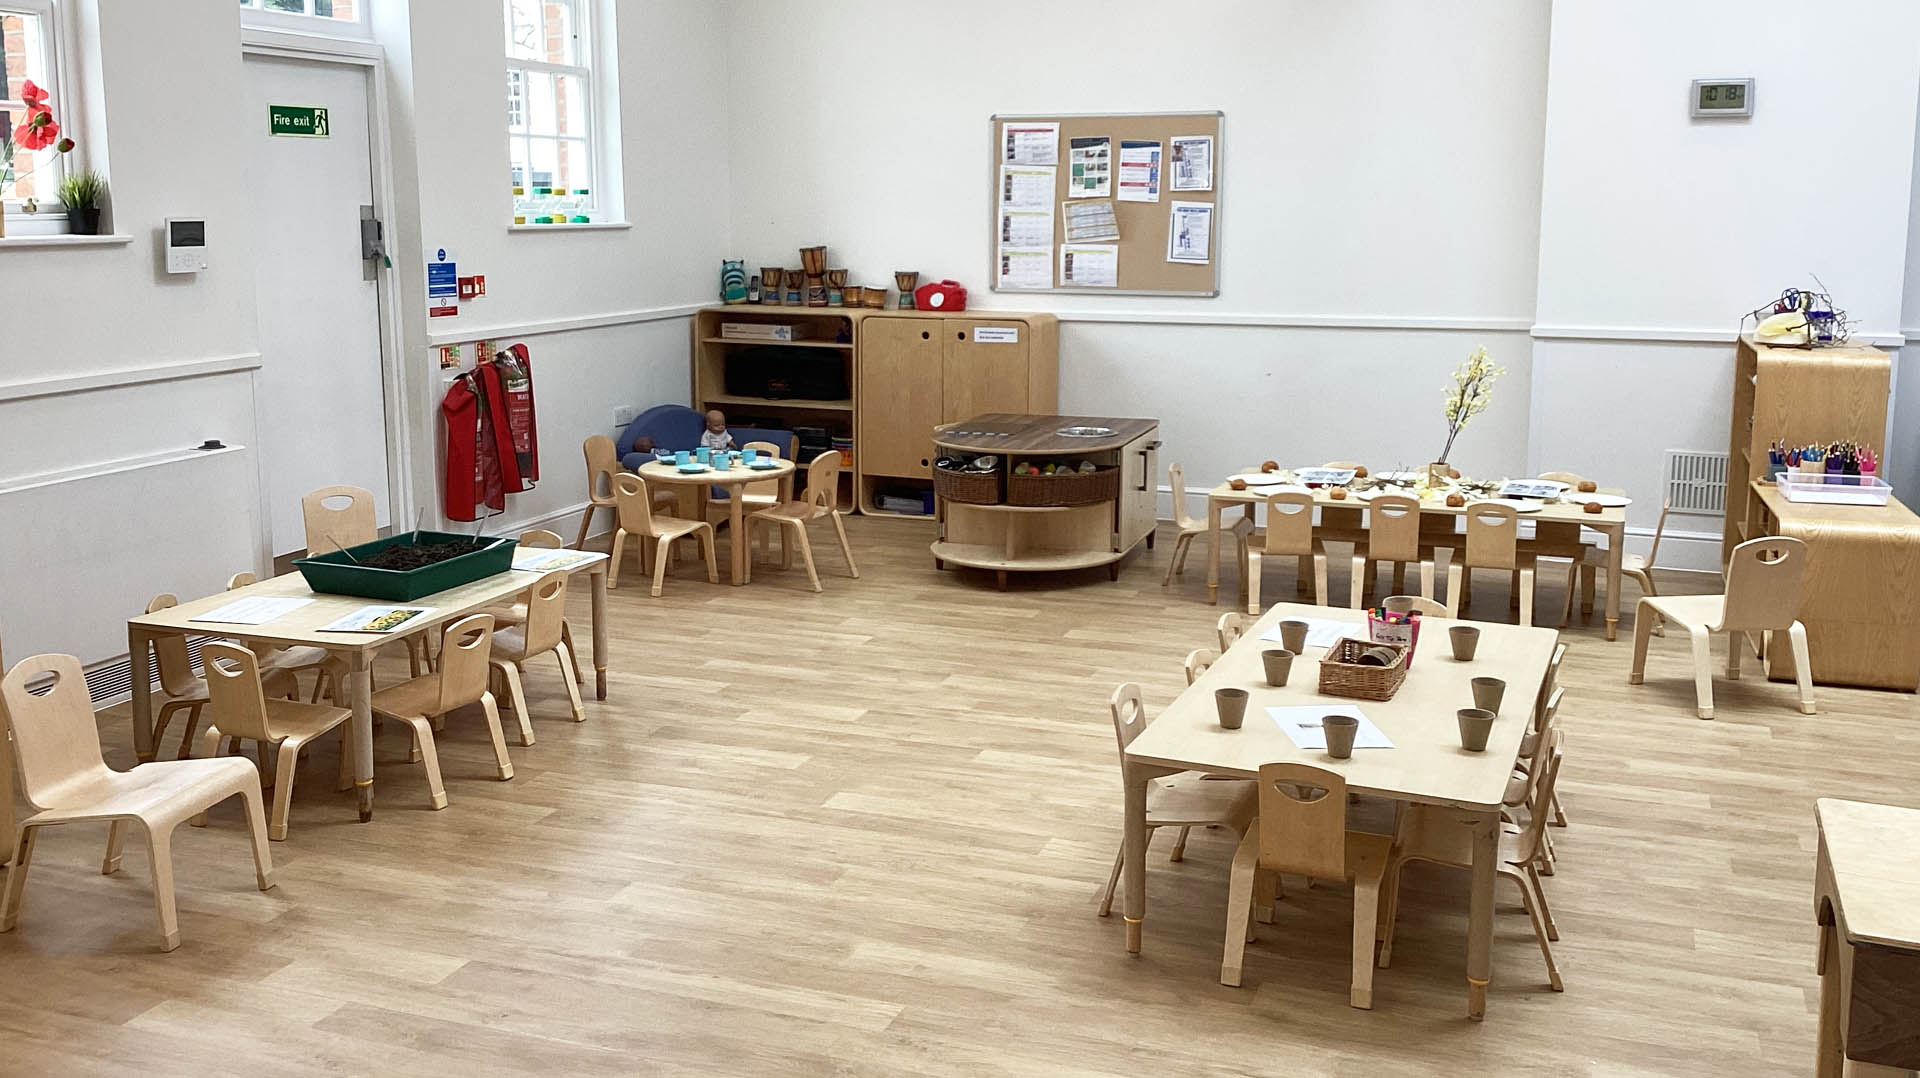 Kingston Victoria Road Day Nursery and Preschool Preschool Room